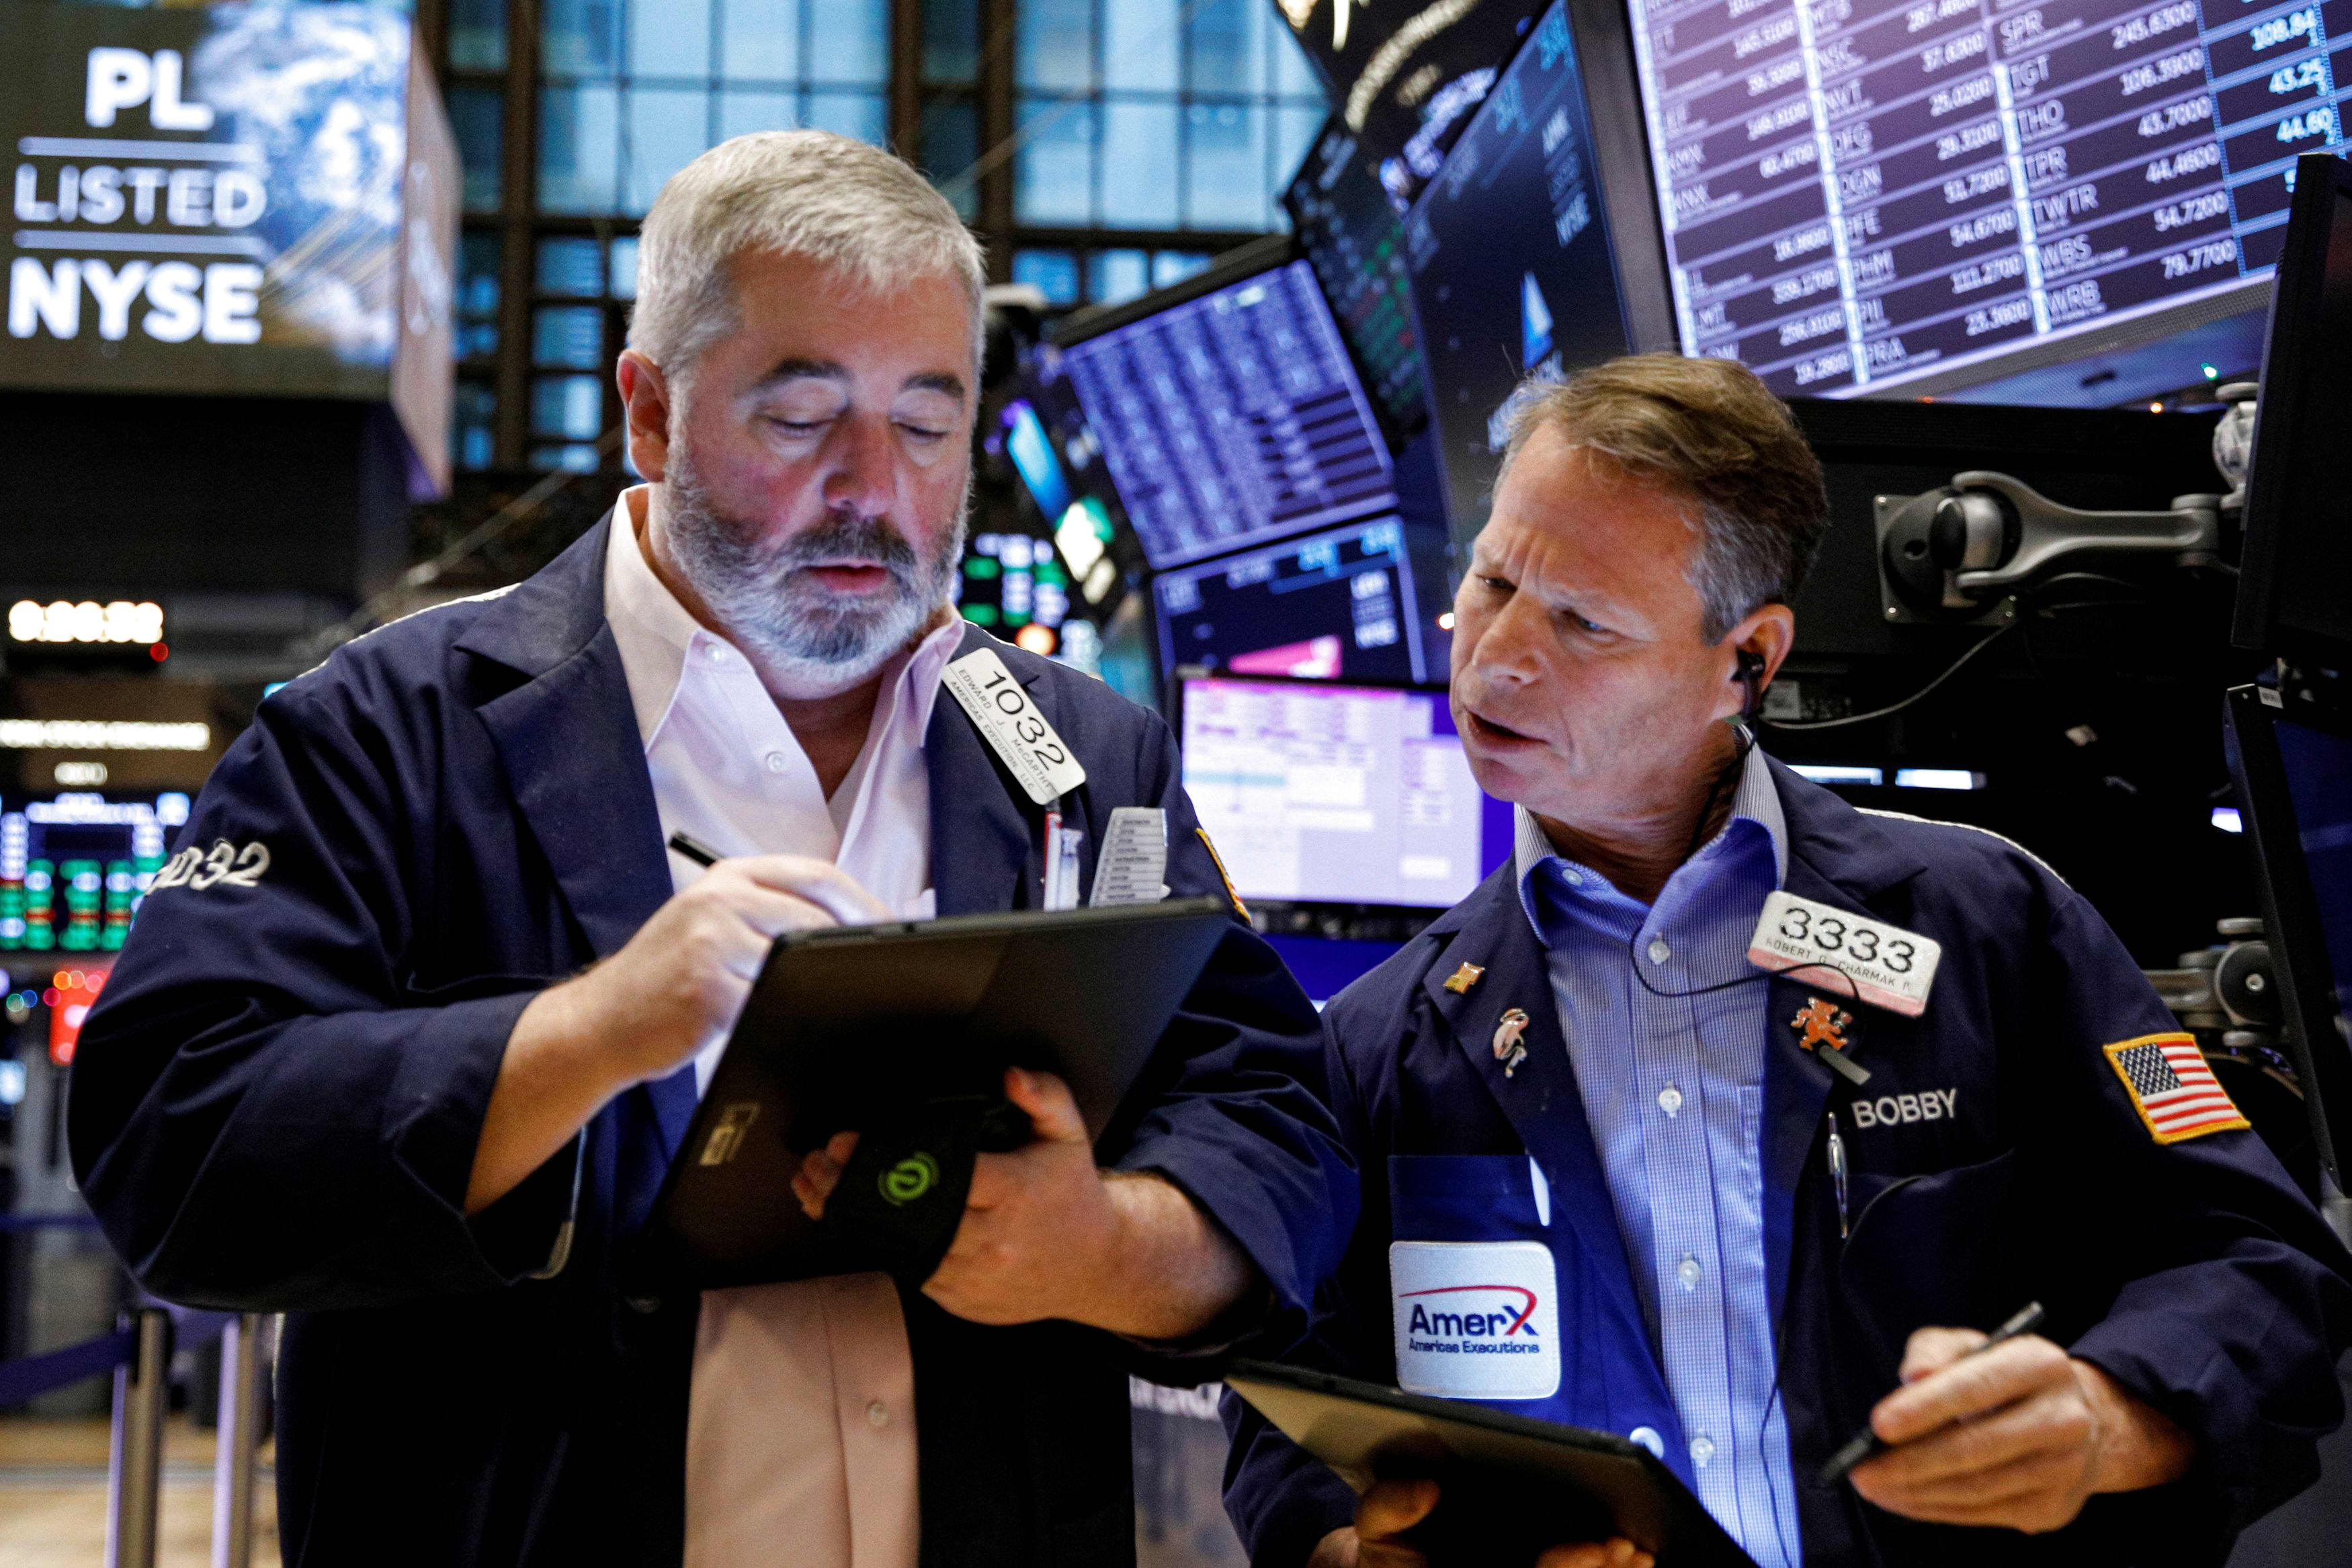 Dow falls more than 300 points as bank stocks struggle after earnings, JPMorgan slides 6%